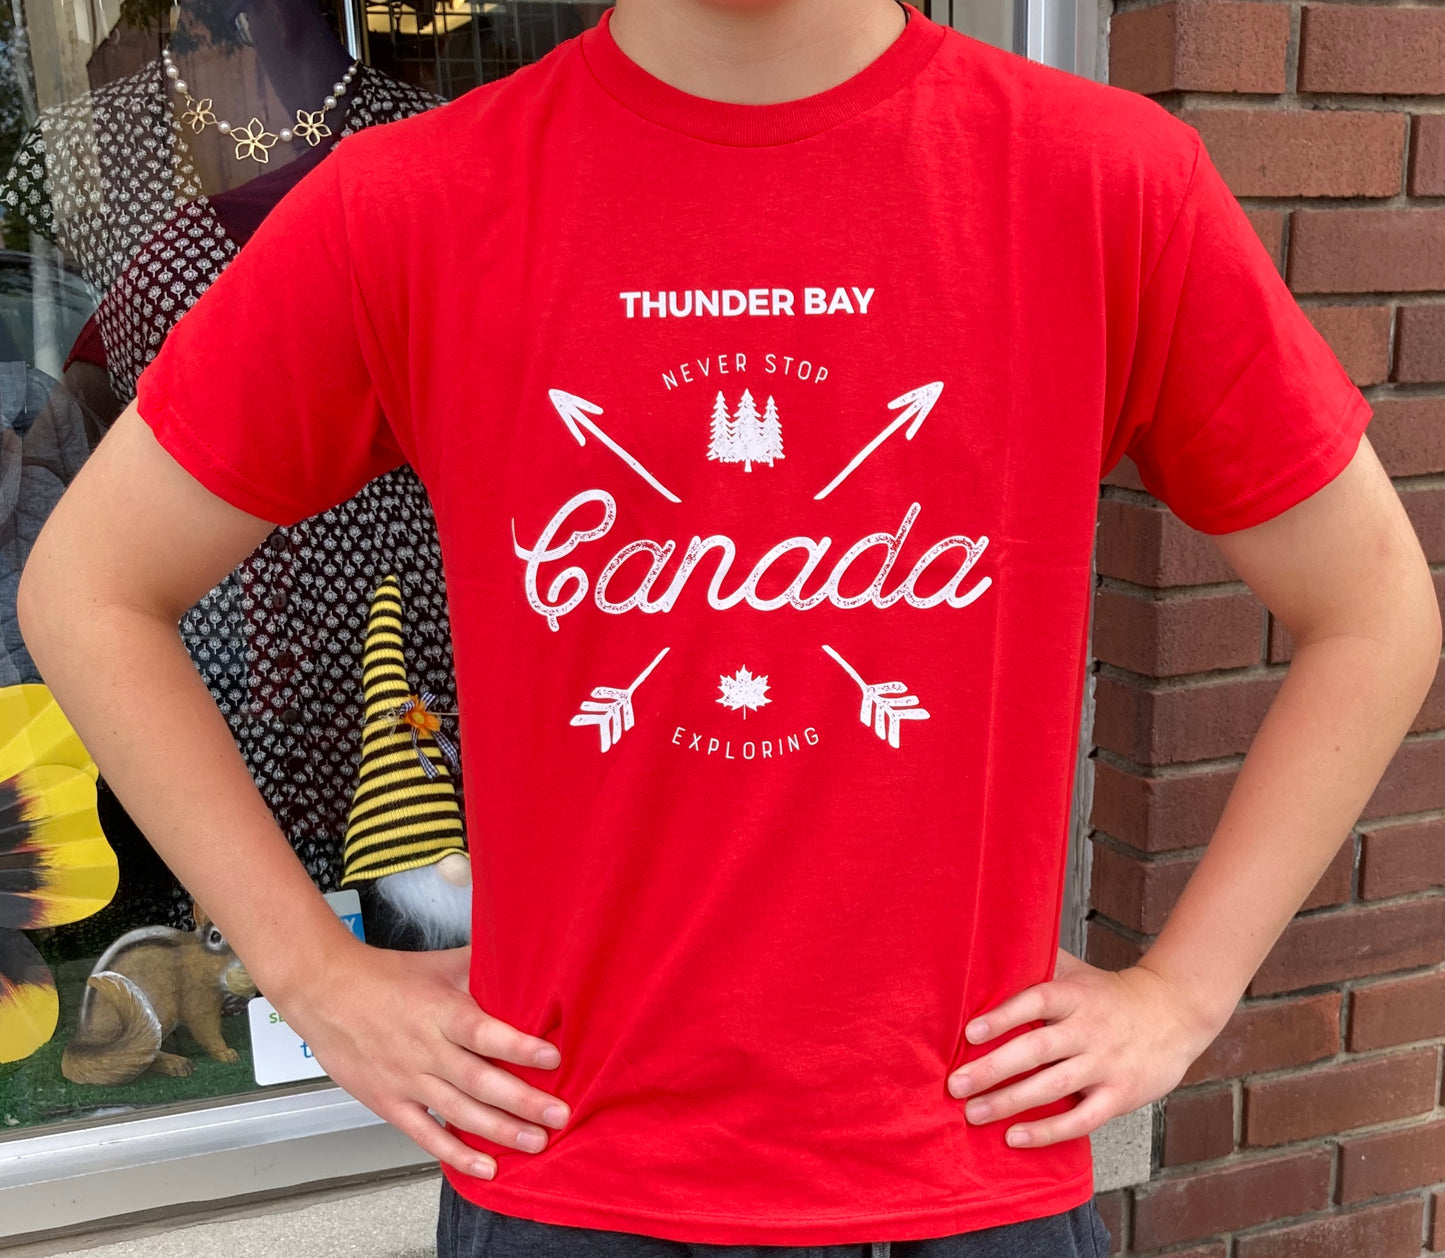 Souvenir Clothing - Youth T-Shirt - Never Stop Exploring - Thunder Bay, Canada - Red